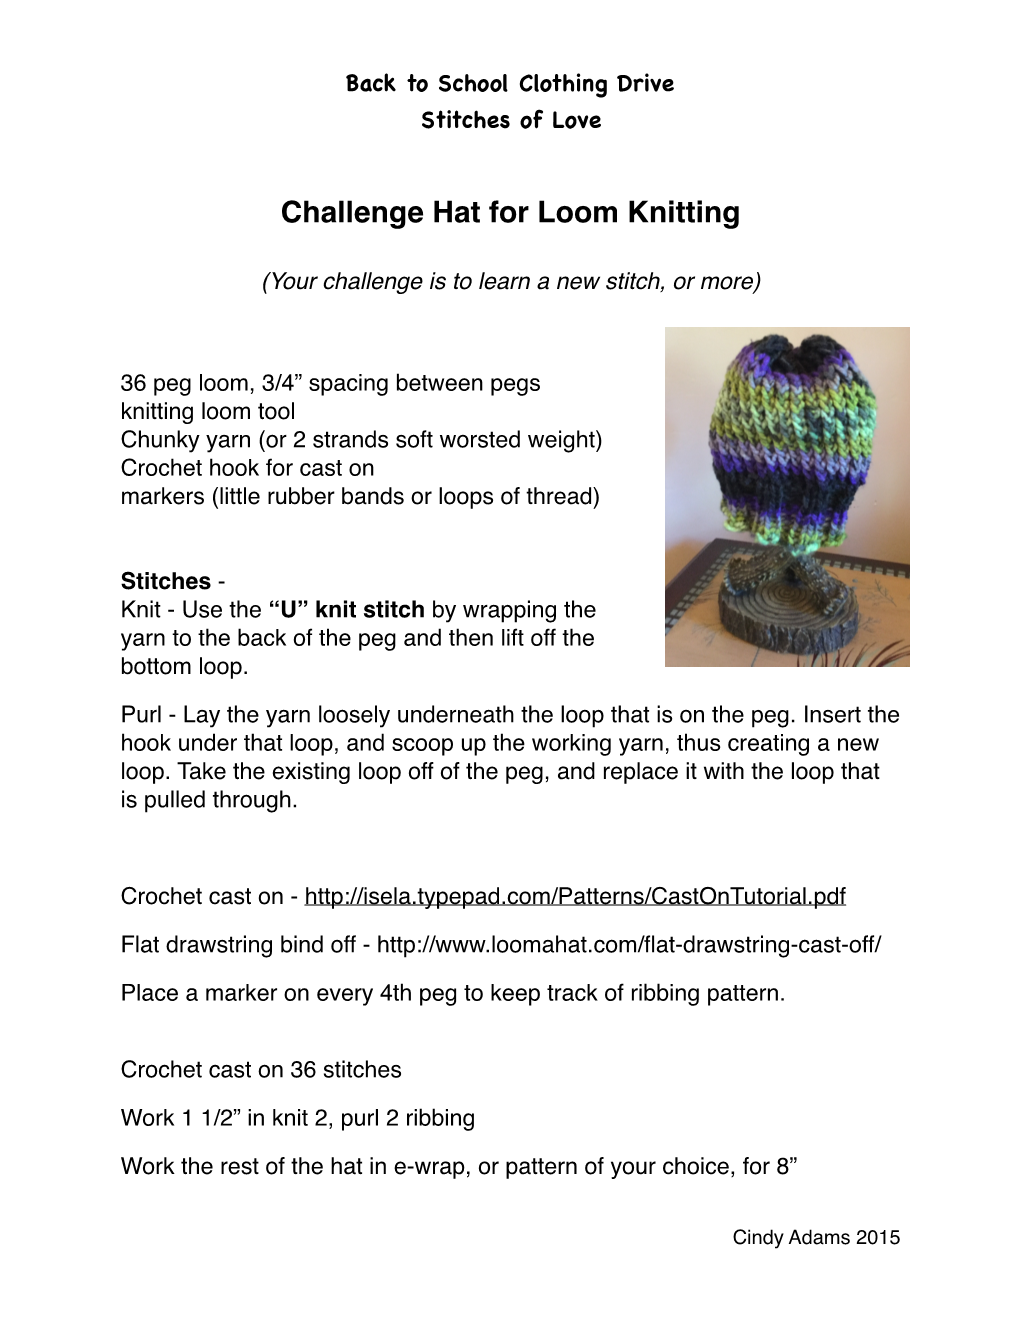 Challenge Hat for Loom Knitting